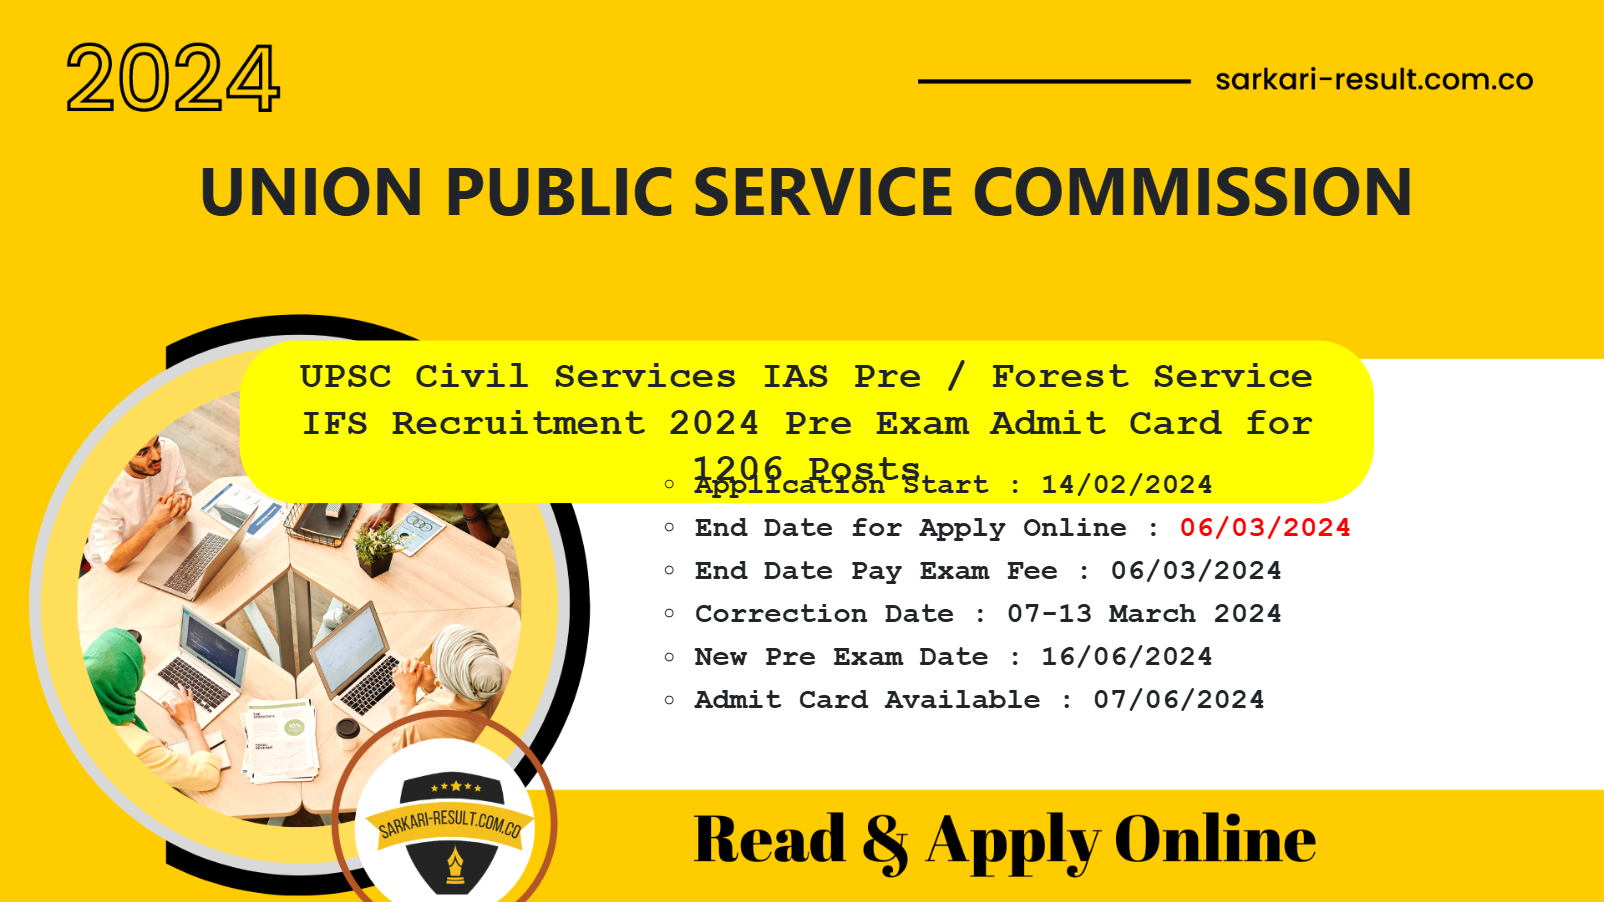 UPSC Civil Services IAS IFS Pre Exam Admit Card 2024